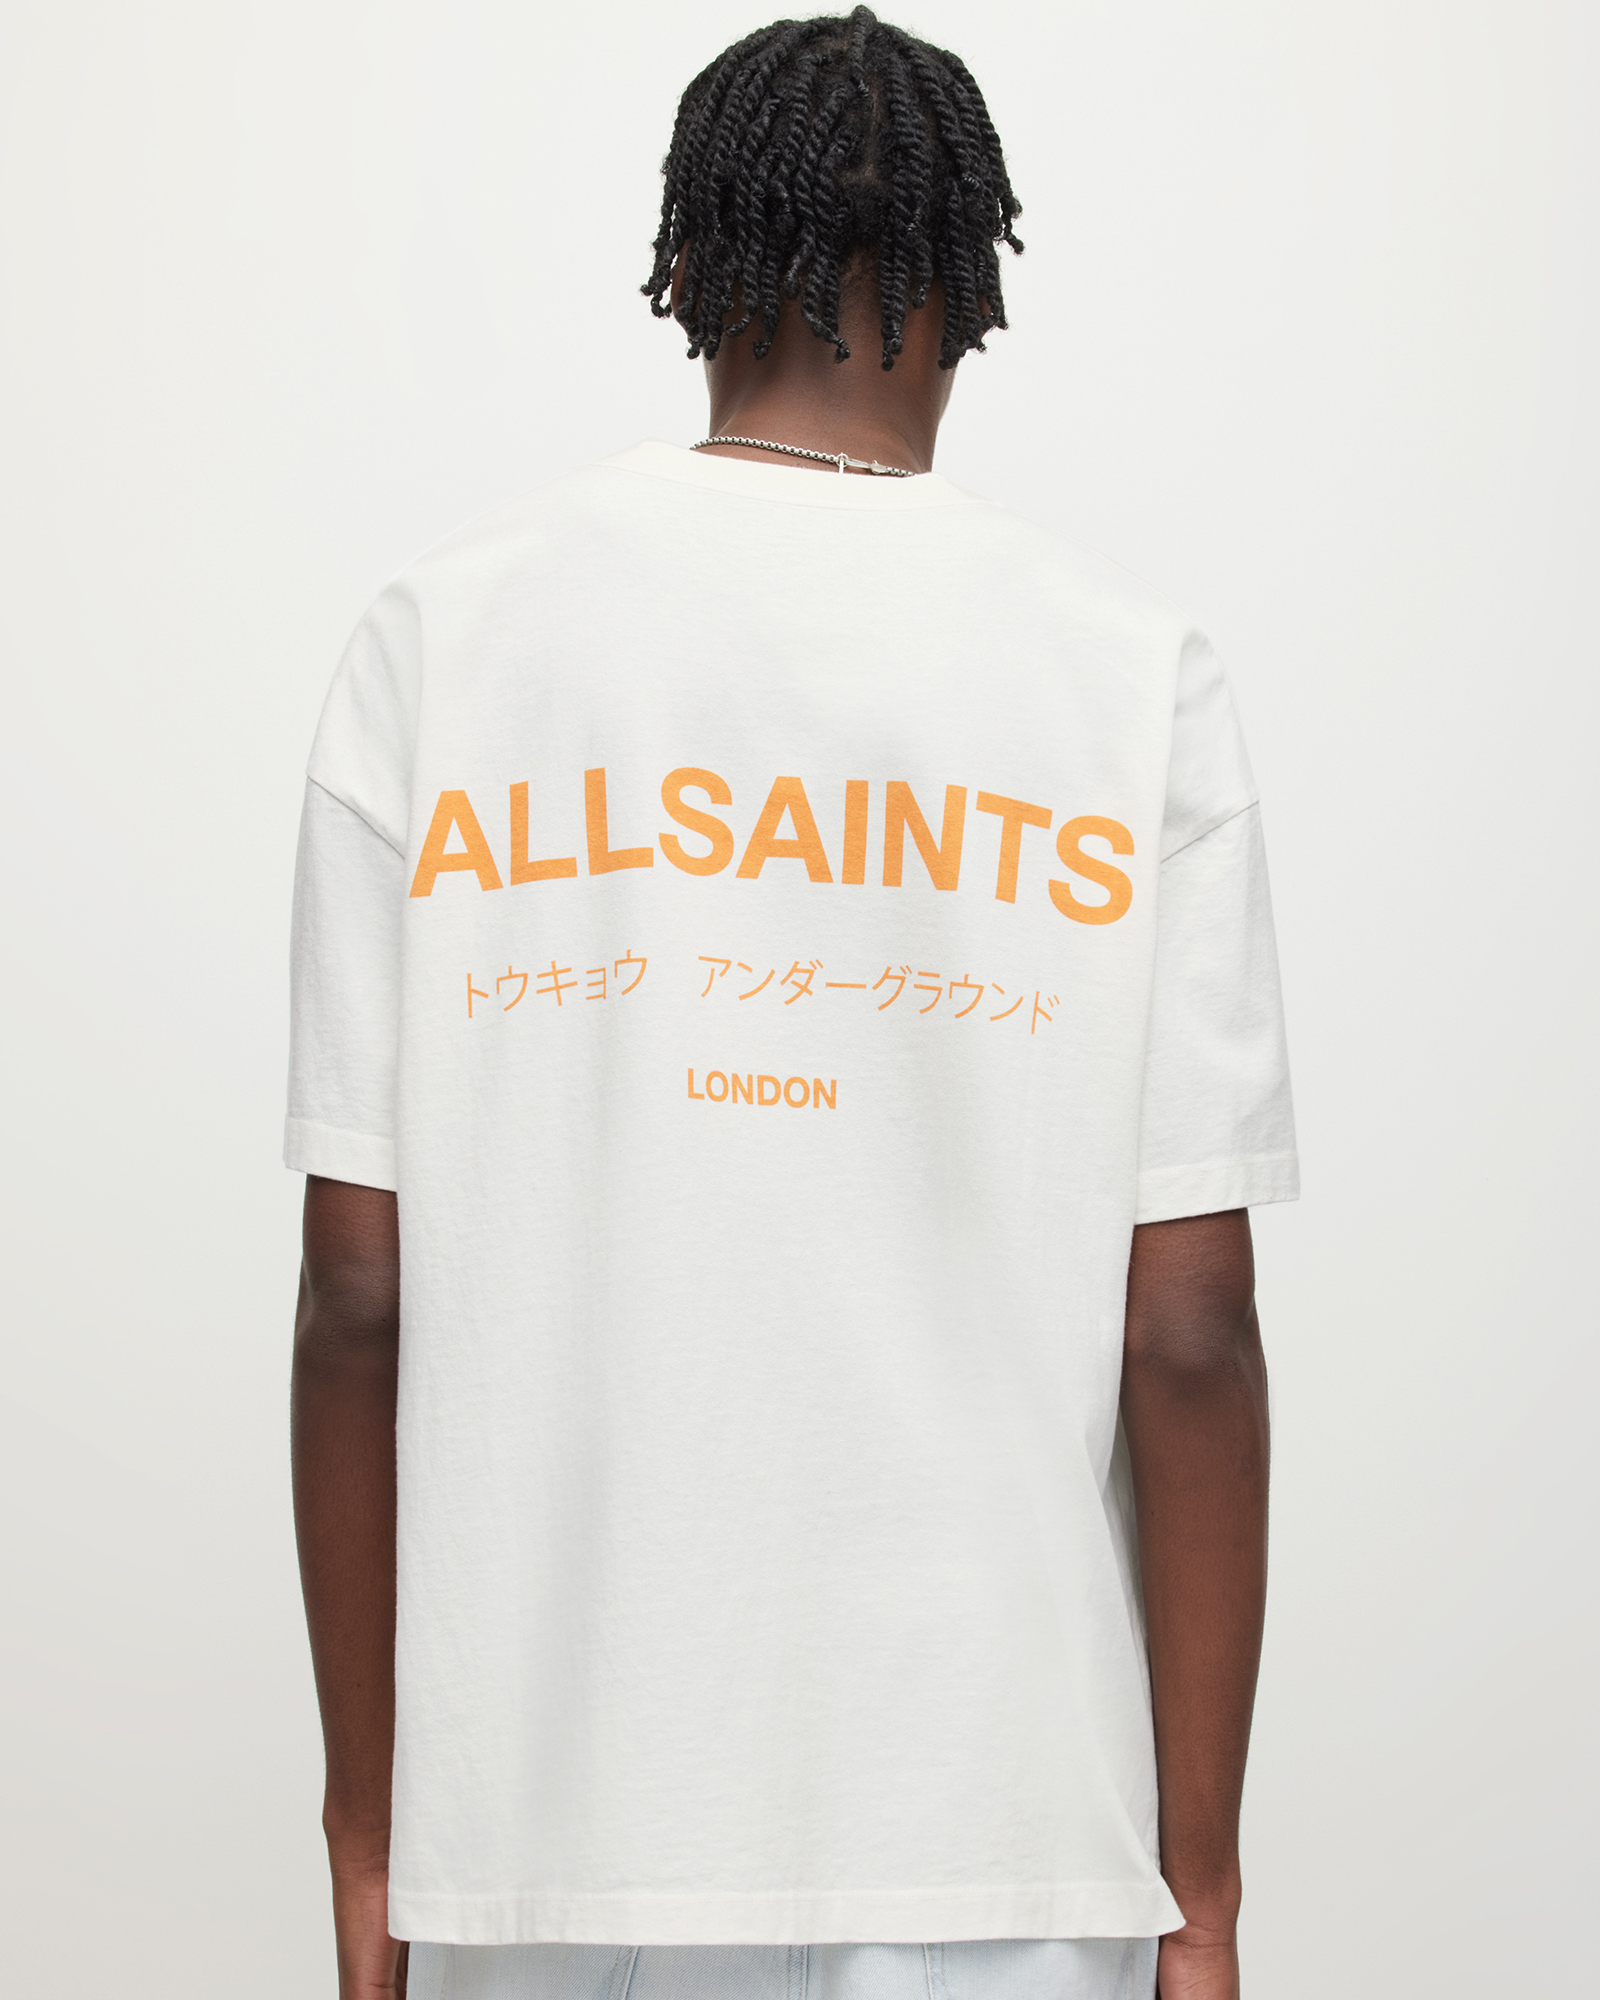 AllSaints Underground Oversized Crew T-Shirt,, ASHEN WHITE/ORANGE